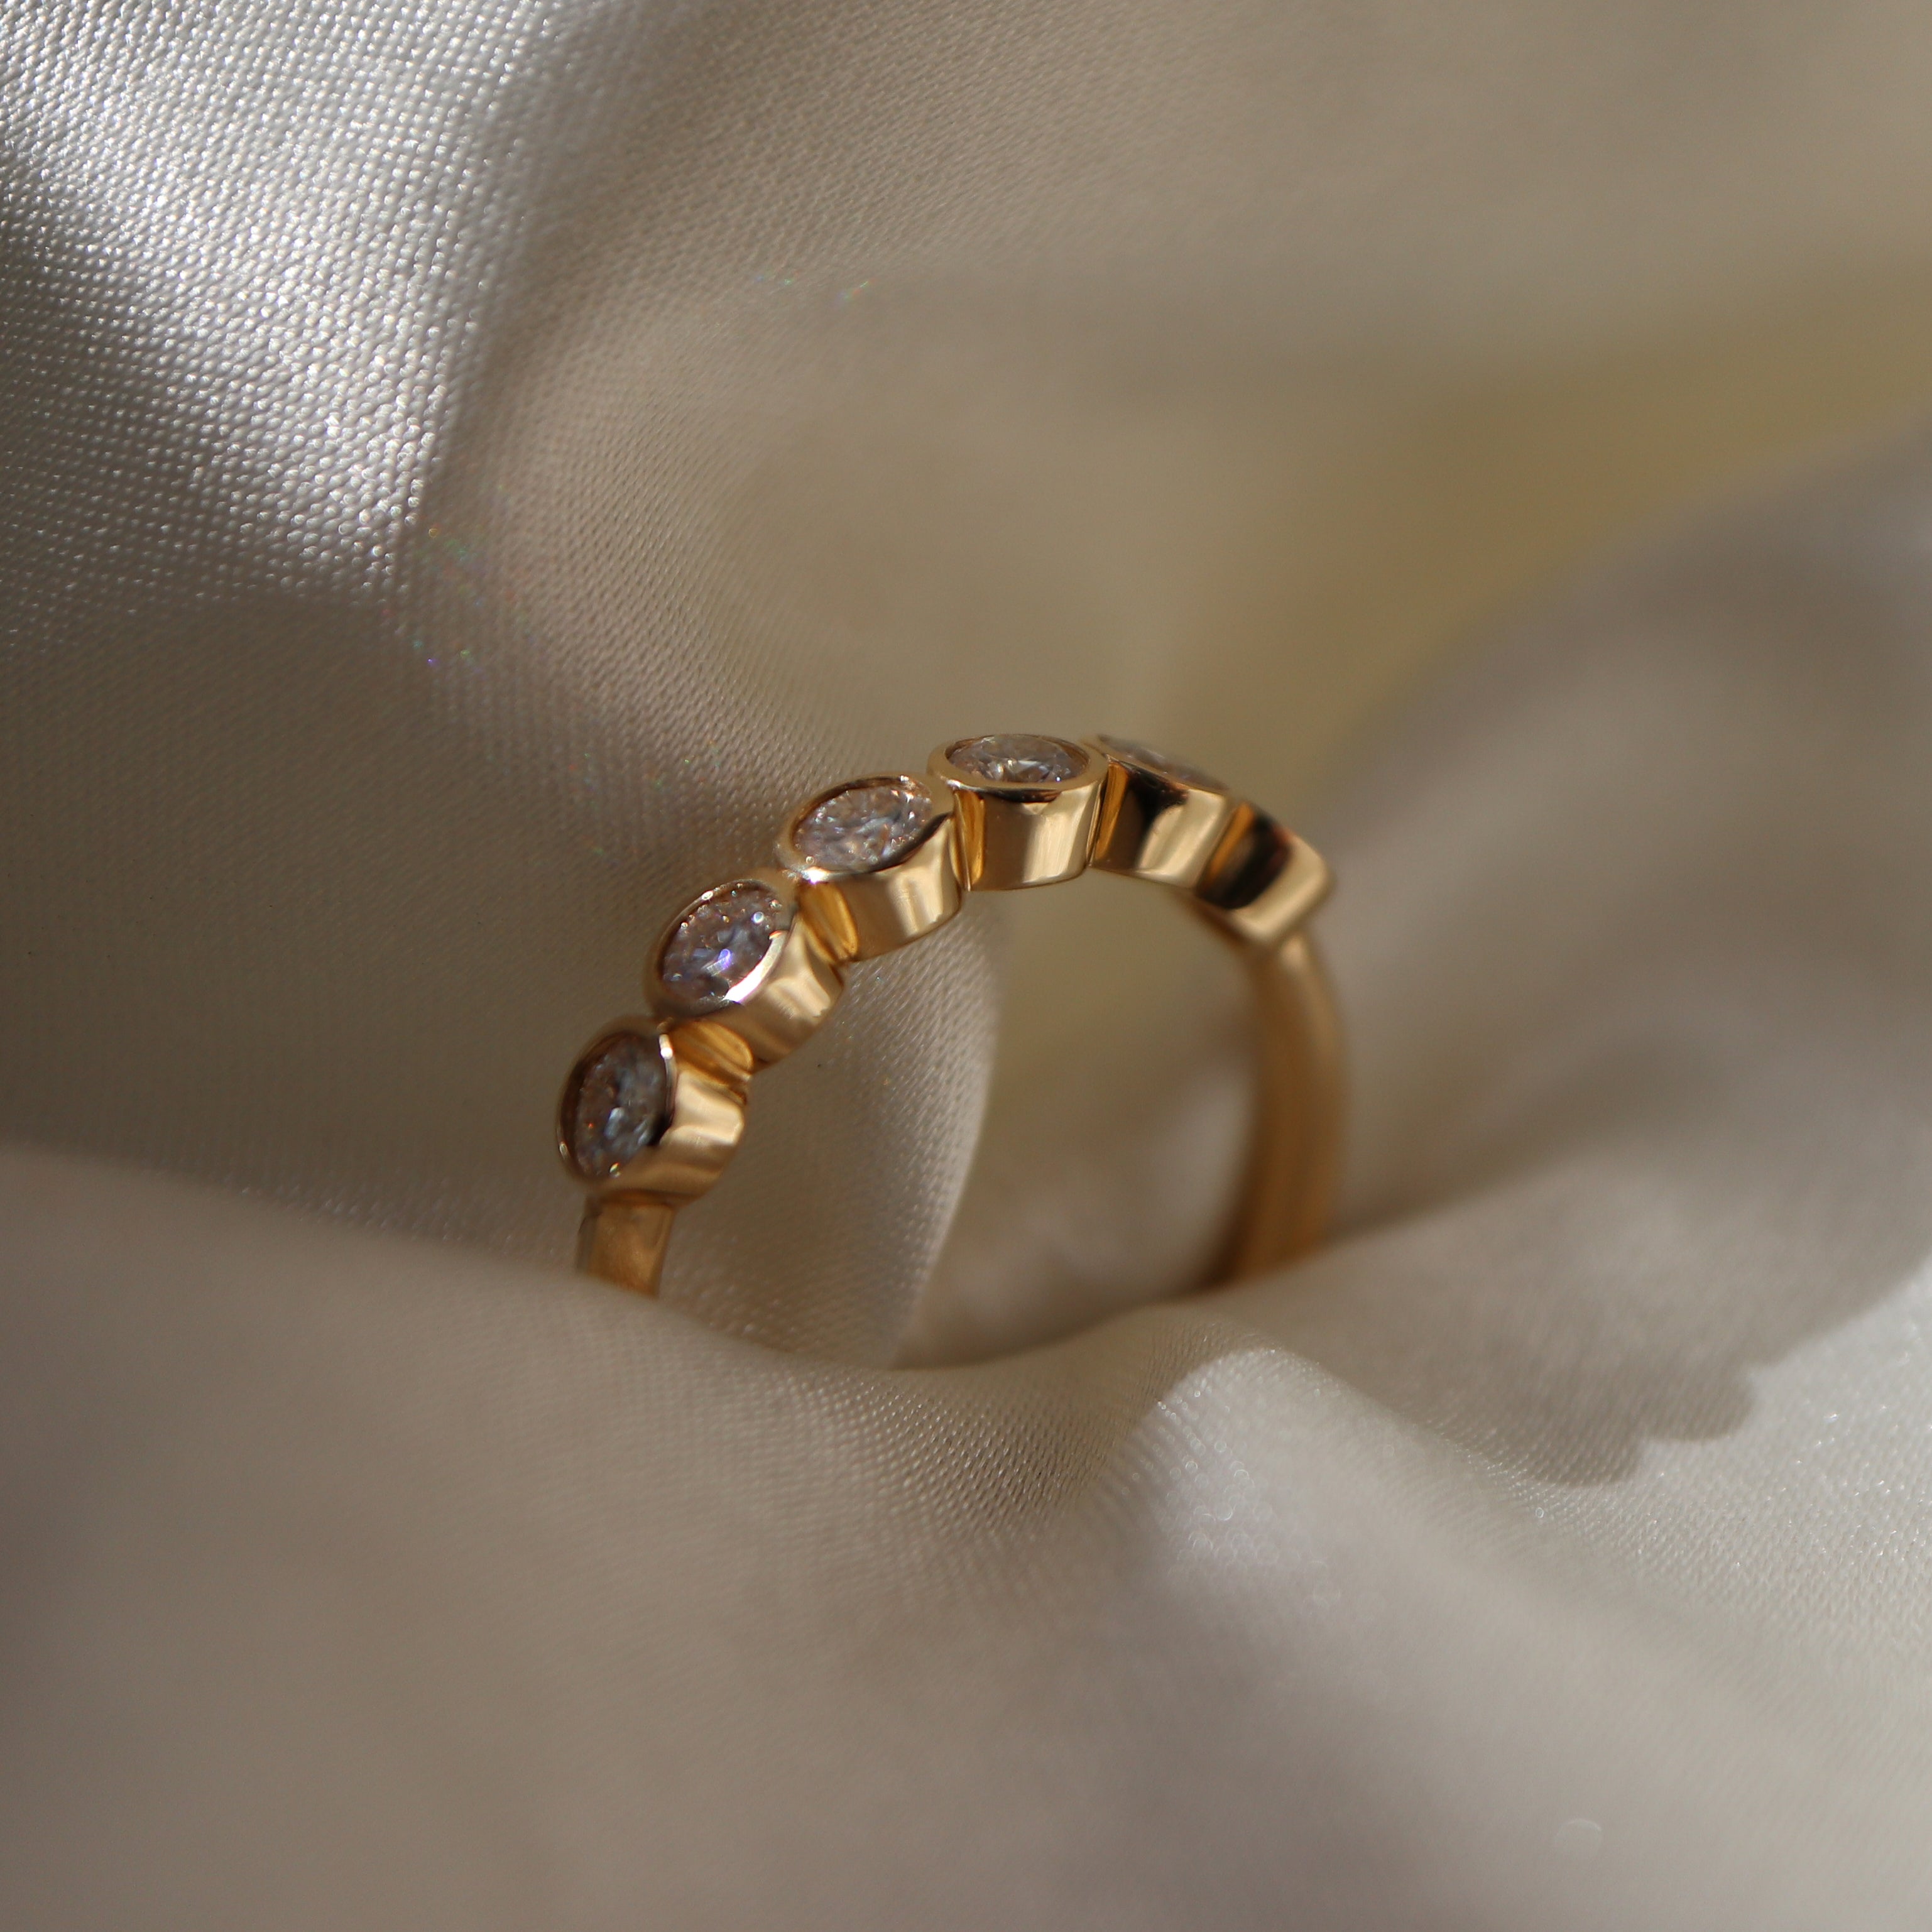 The Harper Round Bezel Ceremonial Ring